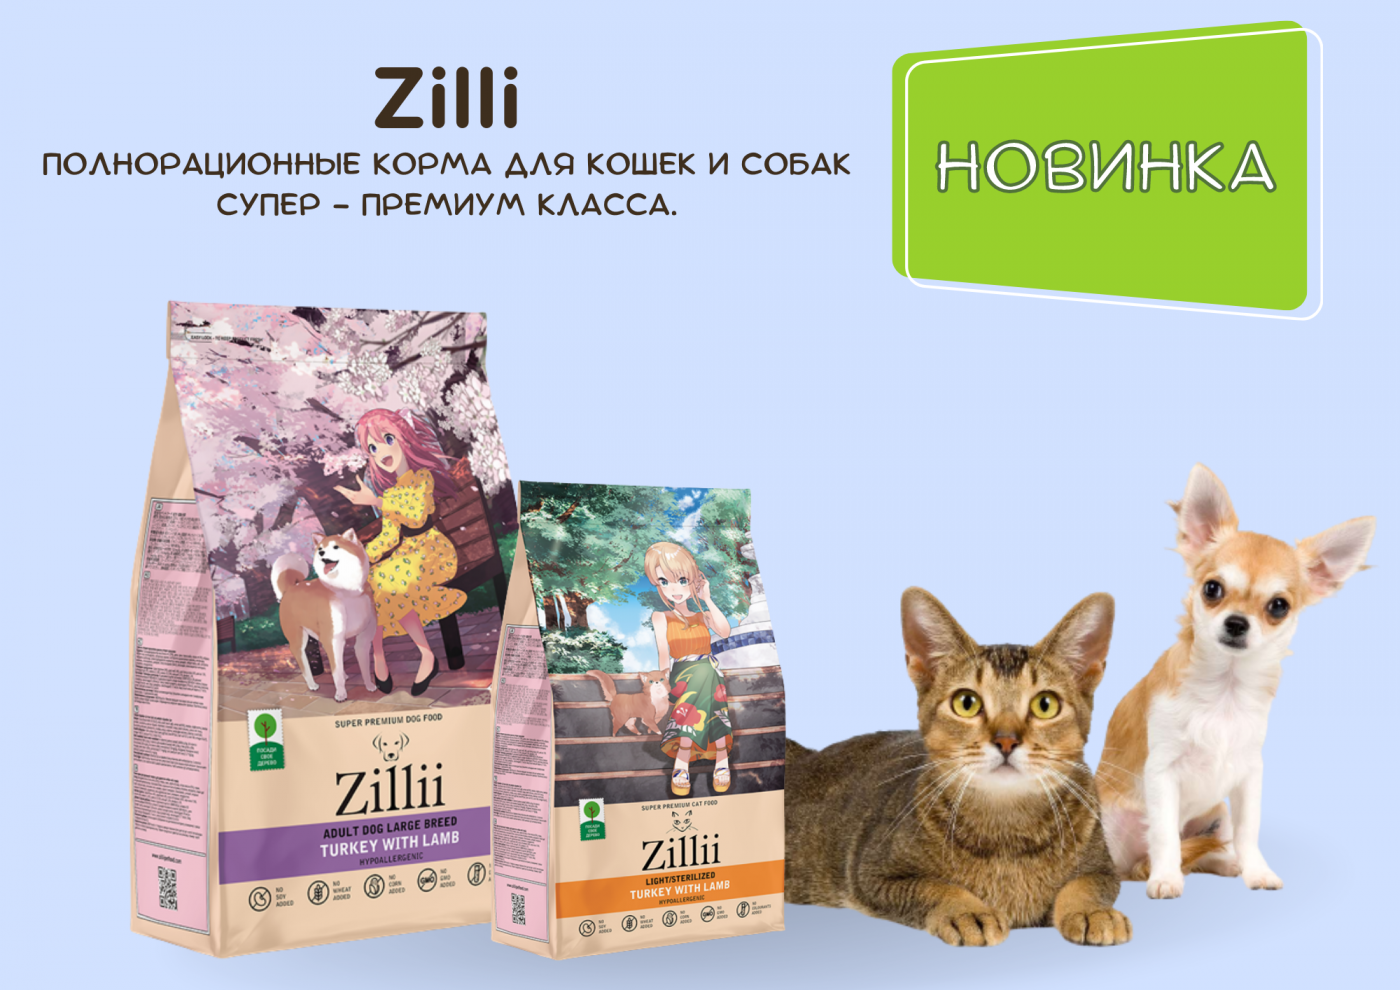 Zillii корм для кошек. Корм для кошек сухой zillii. Кошачий корм Zilli. Корм для кошек Zilli кошек. Сухие корма для кошек супер премиум класса